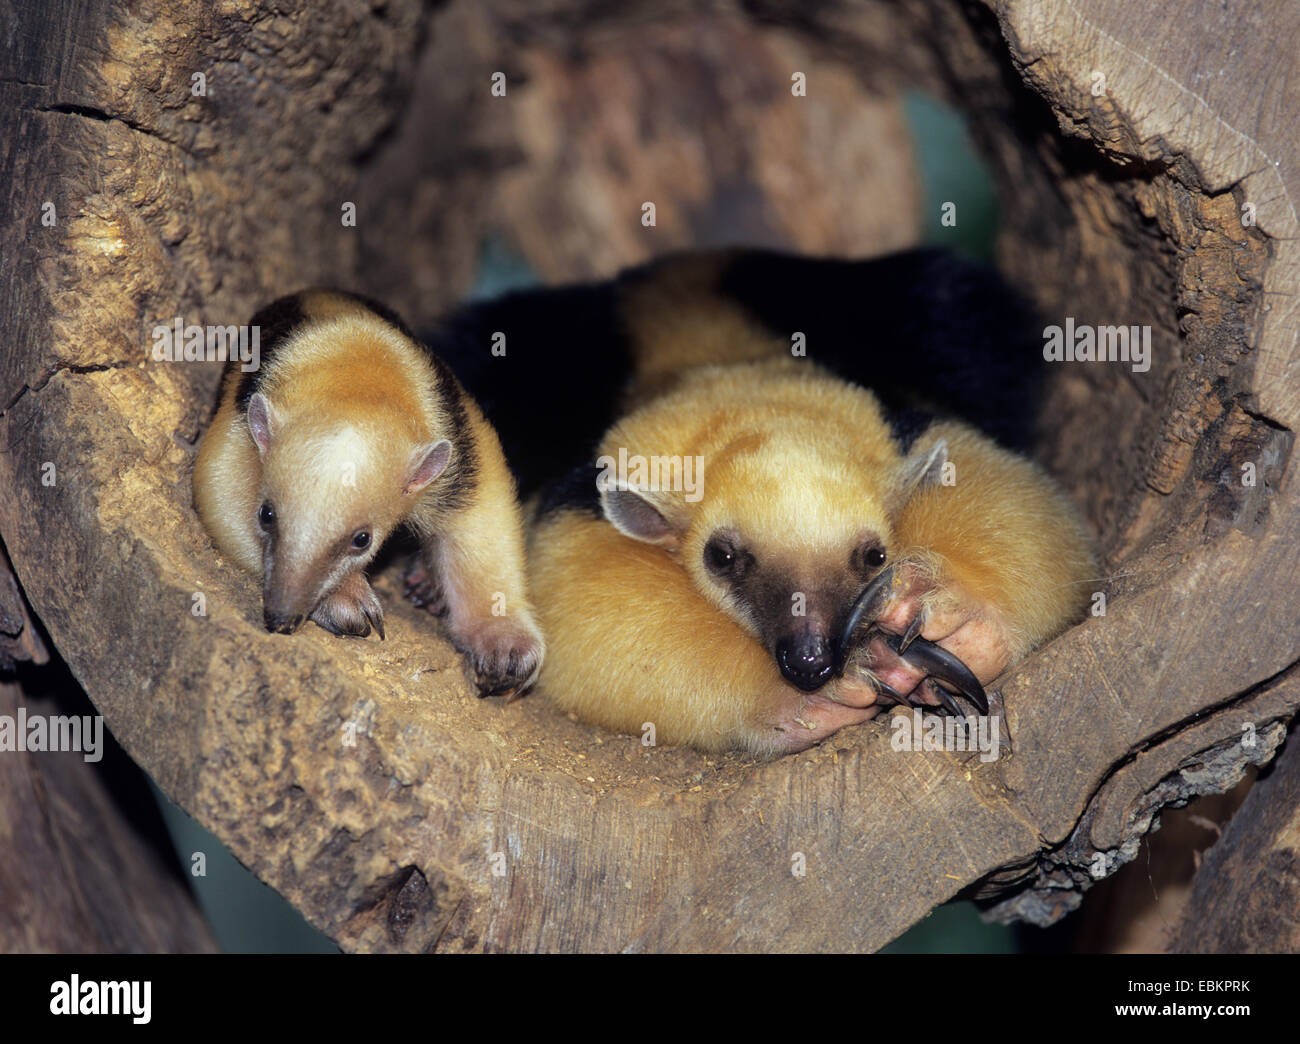 southern tamandua (Tamandua tetradactyla), mother and child lying together in a tree hole Stock Photo